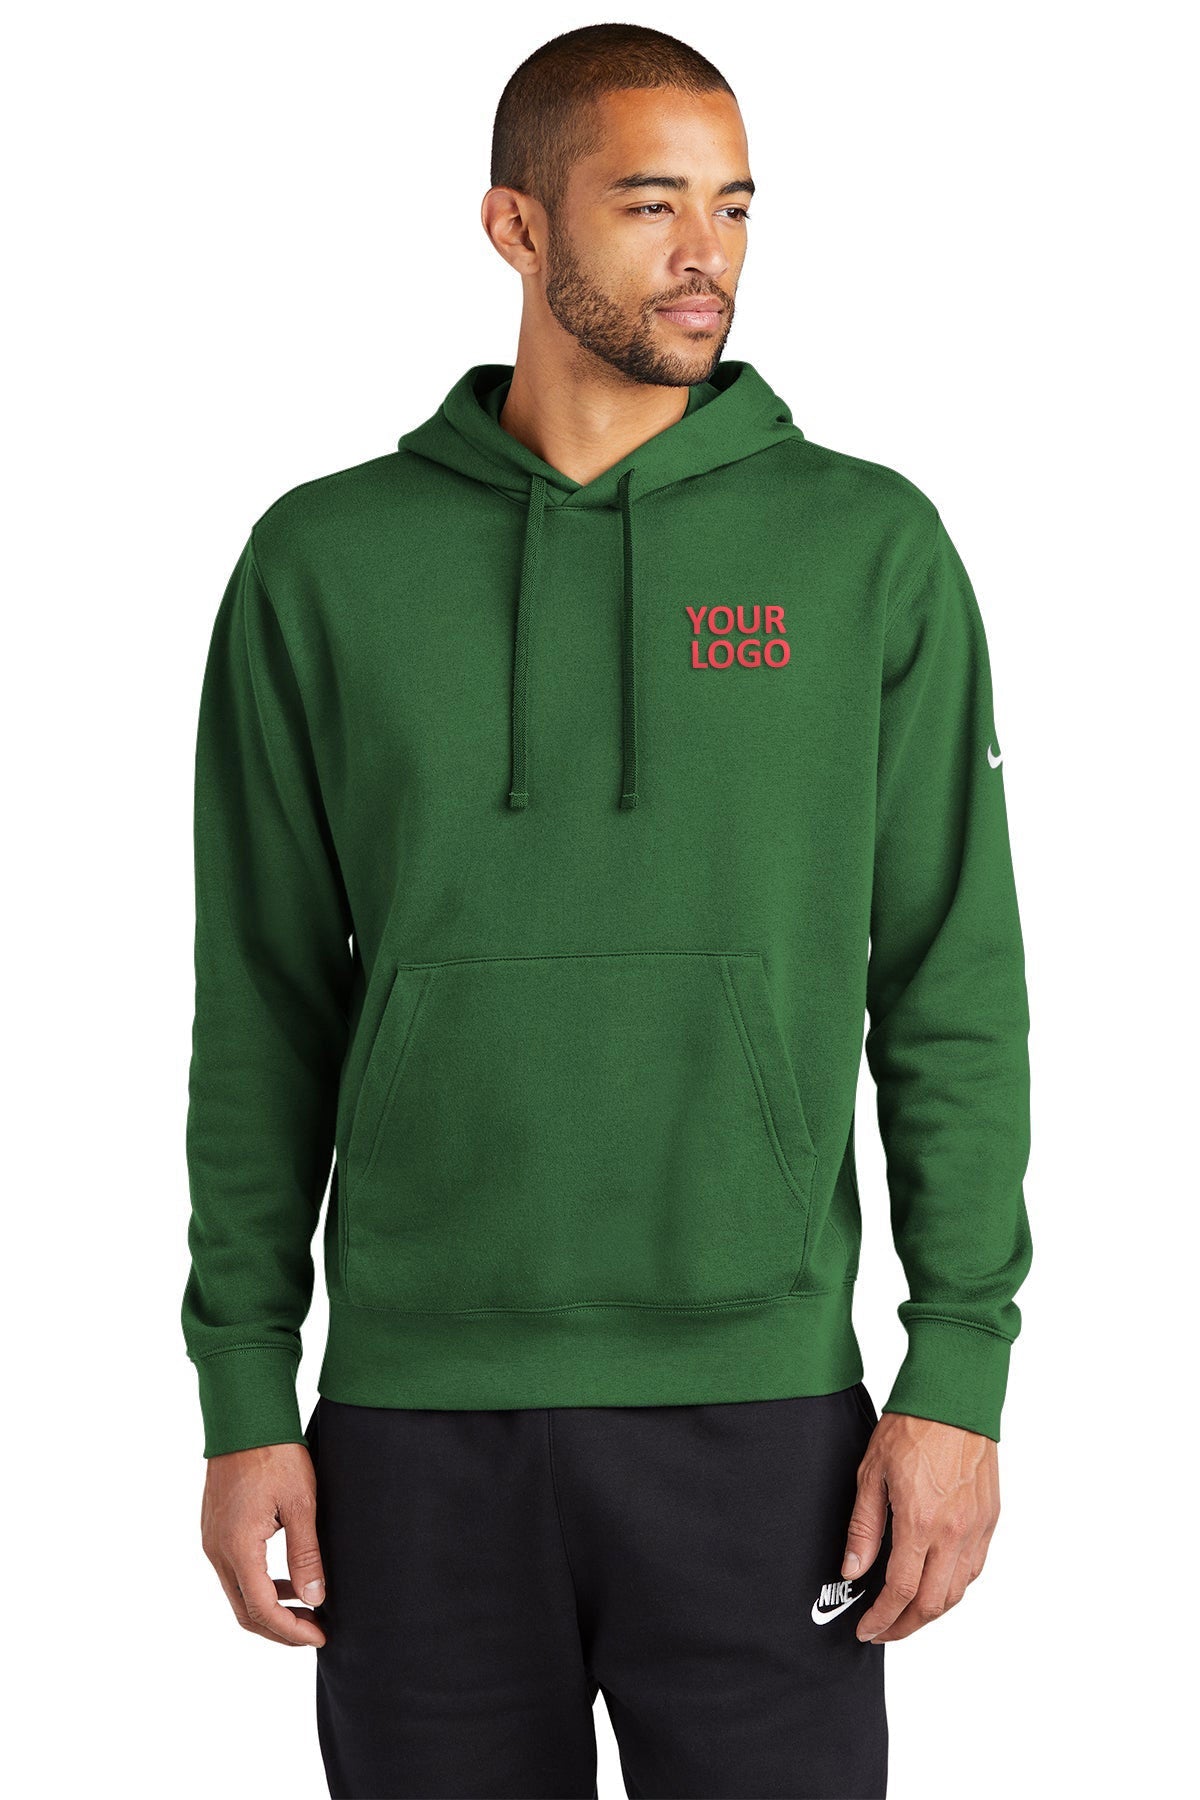 Nike Gorge Green NKDR1499 custom dri fit sweatshirts